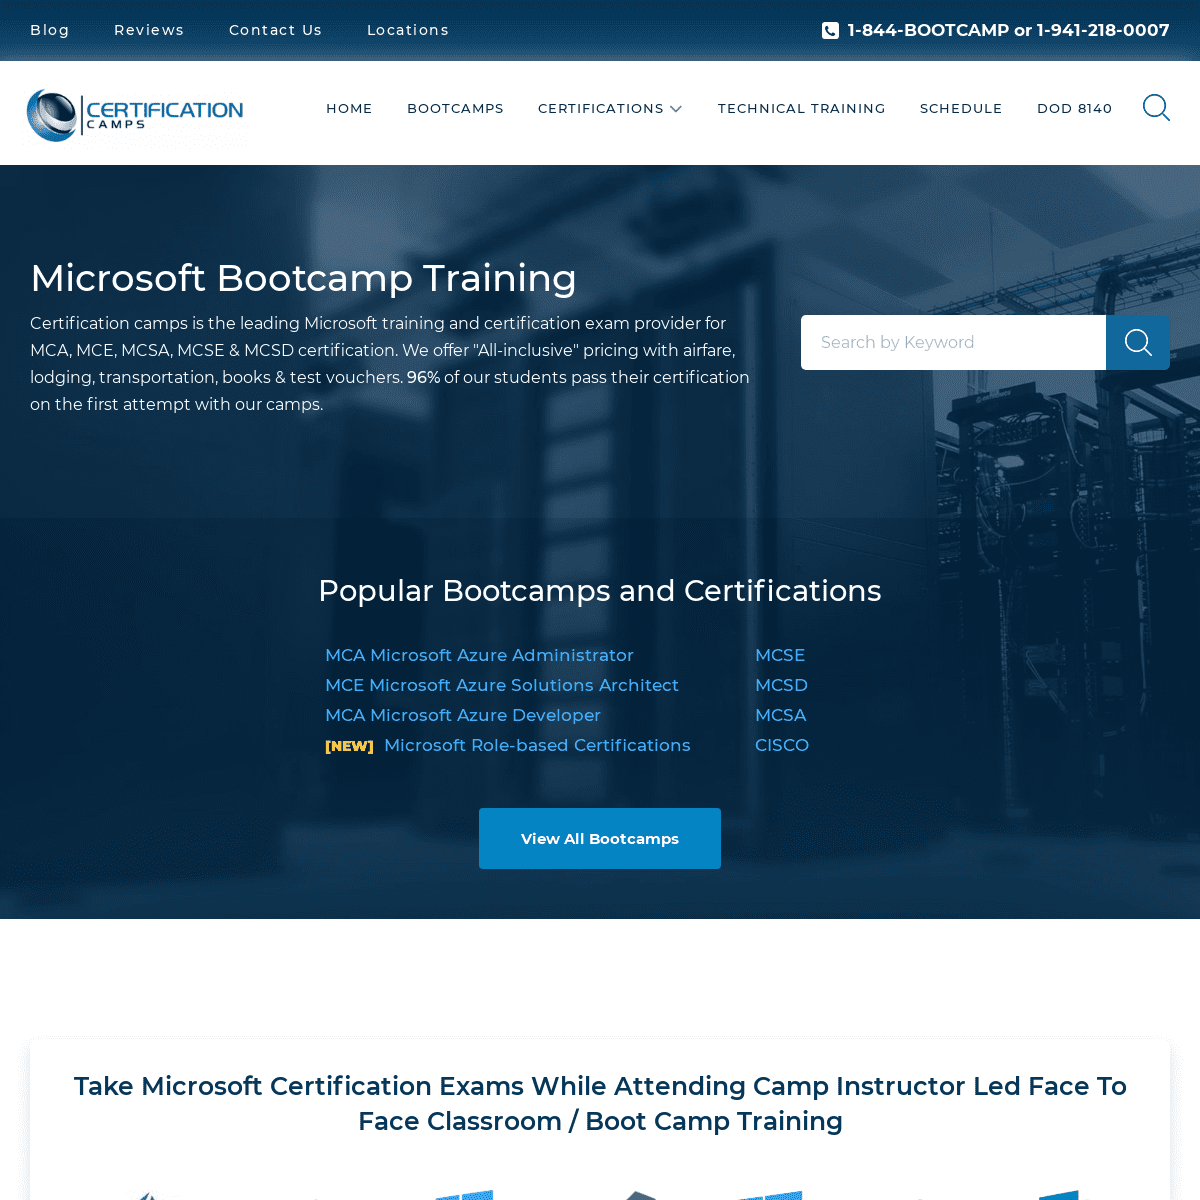 A complete backup of certificationcamps.com